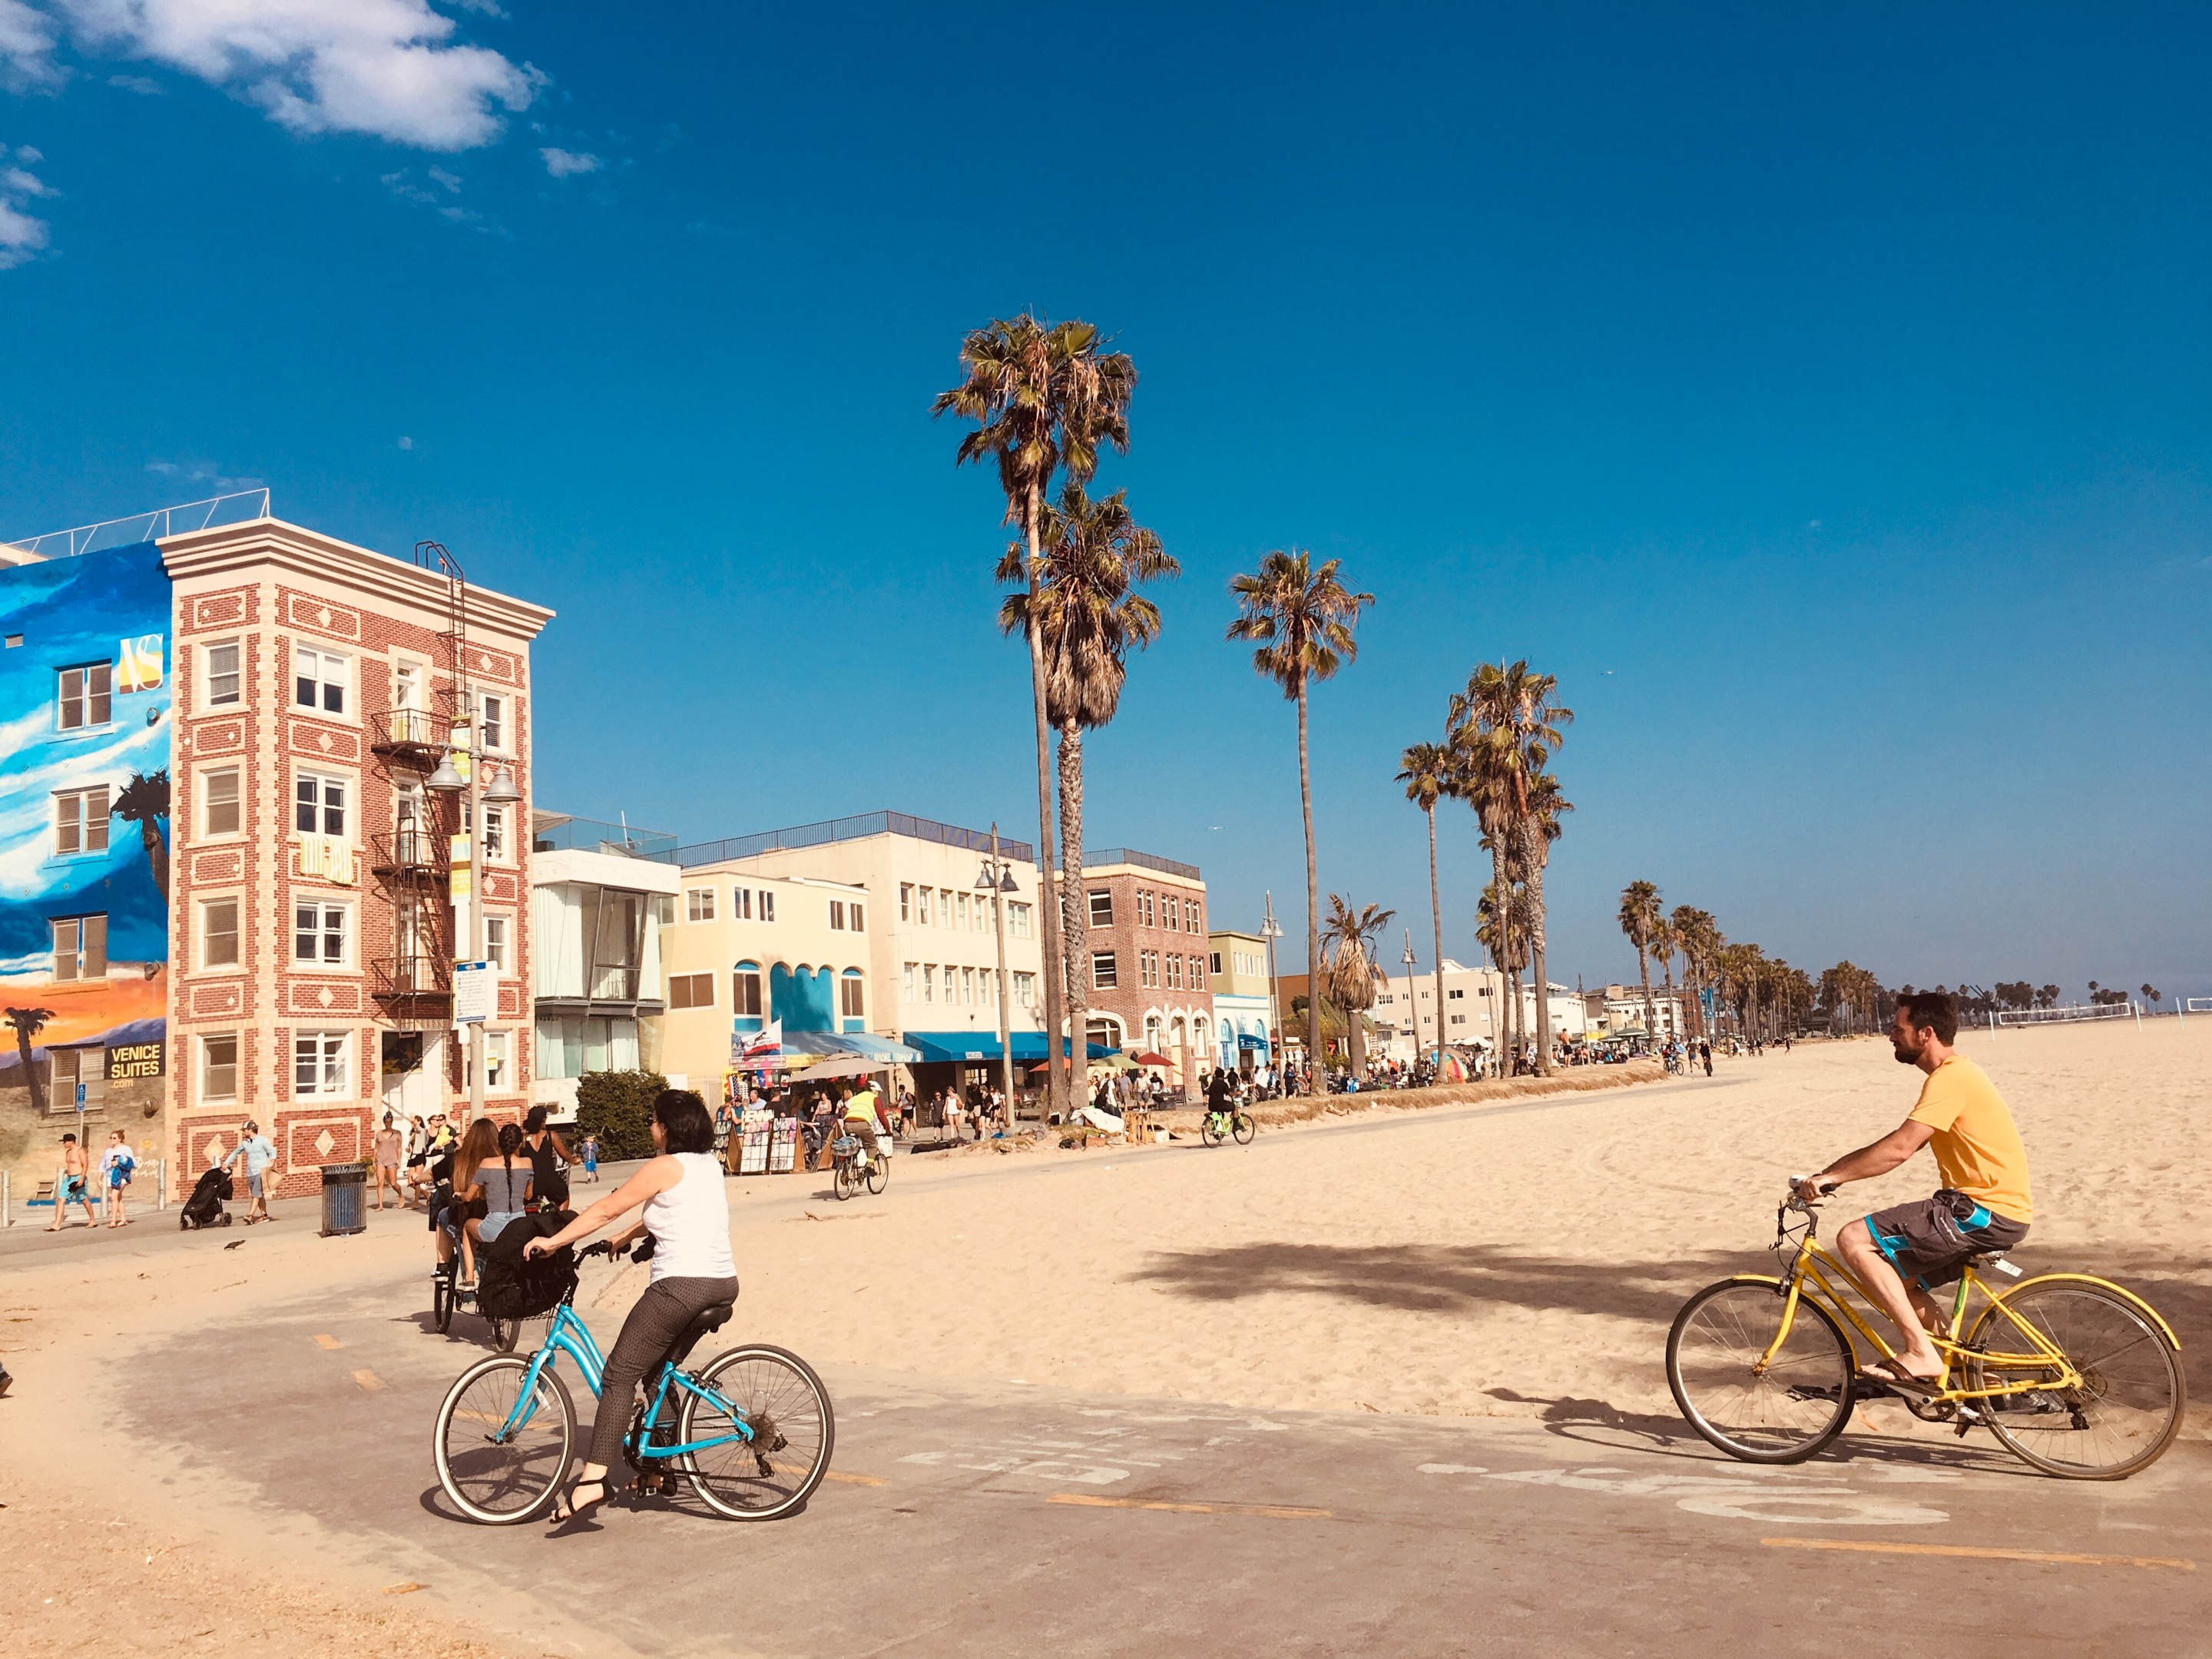 Bike tour of Venice Beach Boardwalk in Los Angeles. Photo by Gina Lemafa